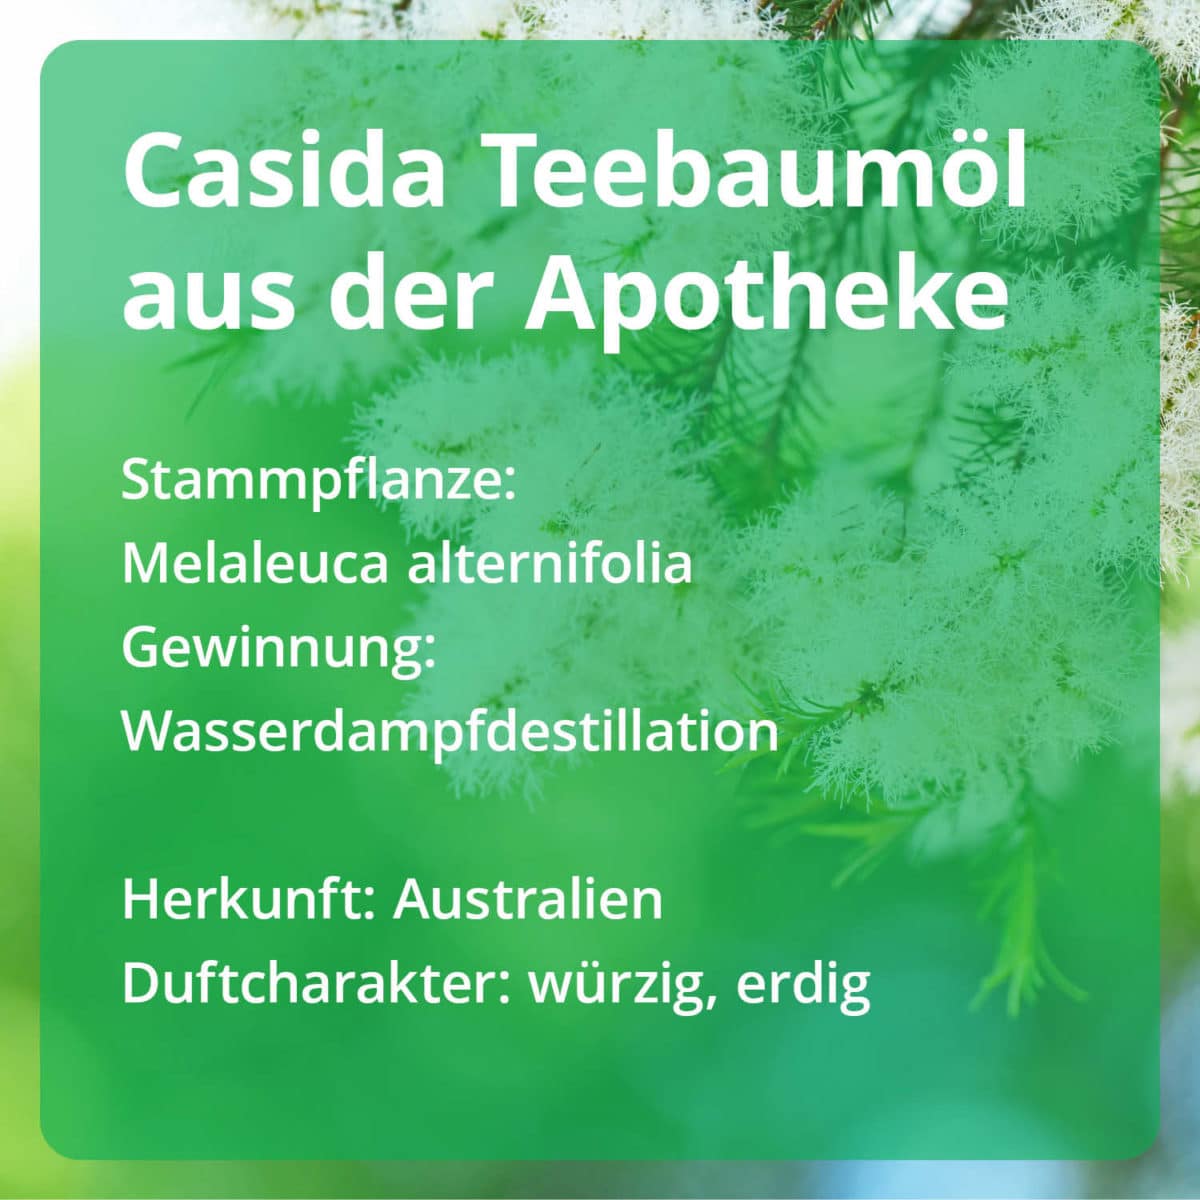 Casida Teebaumöl naturrein – 10 ml 15880774 PZN Apotheke ätherische Öle Melaleuca alternifolia Hautpflege Nagelpilz3